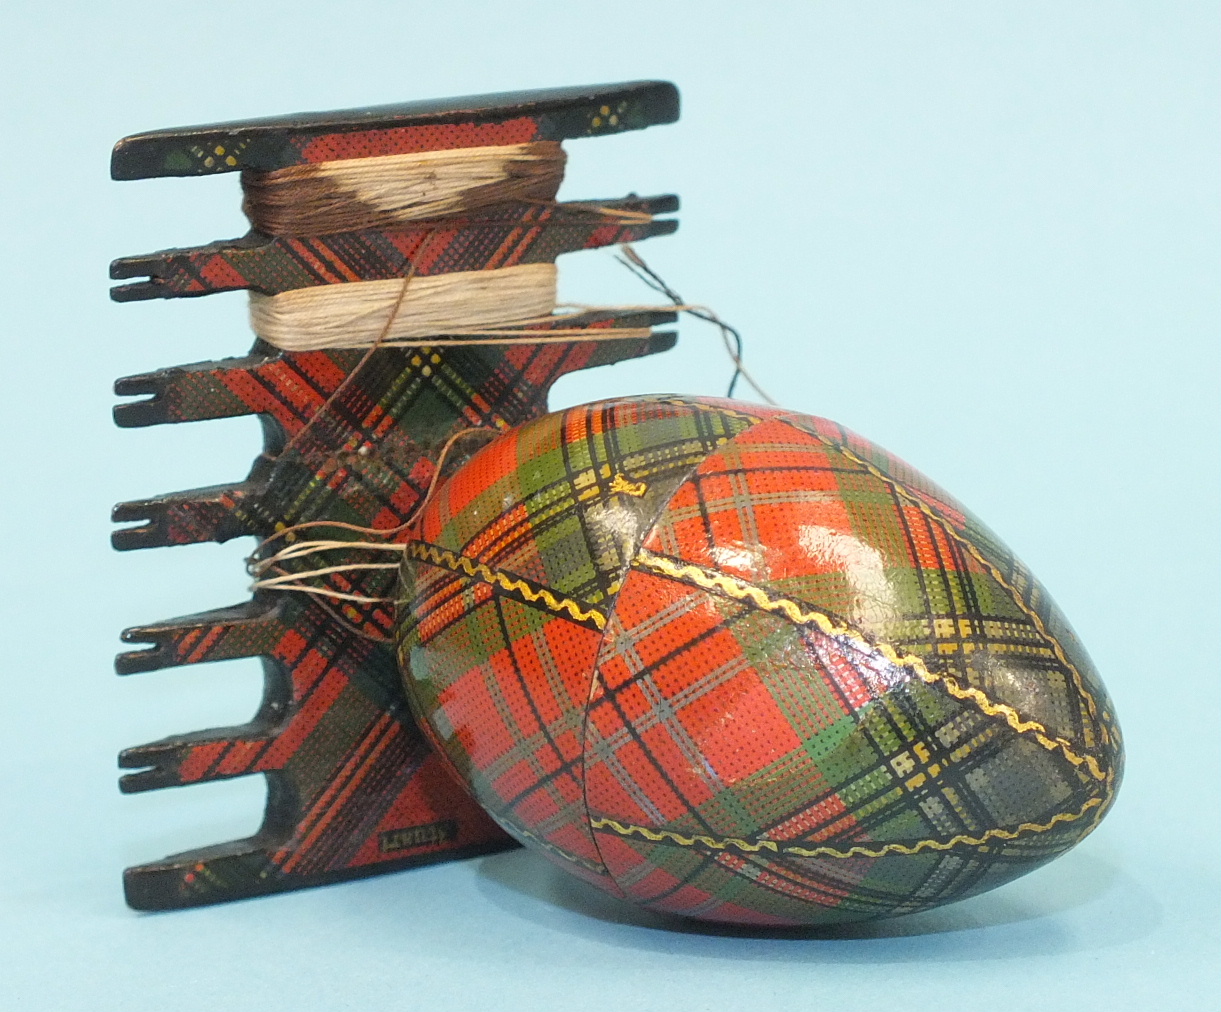 A Tartanware egg-shaped spool box, (McLean), 5cm, a comb-shaped thread winder, (Stuart), 5cm, two